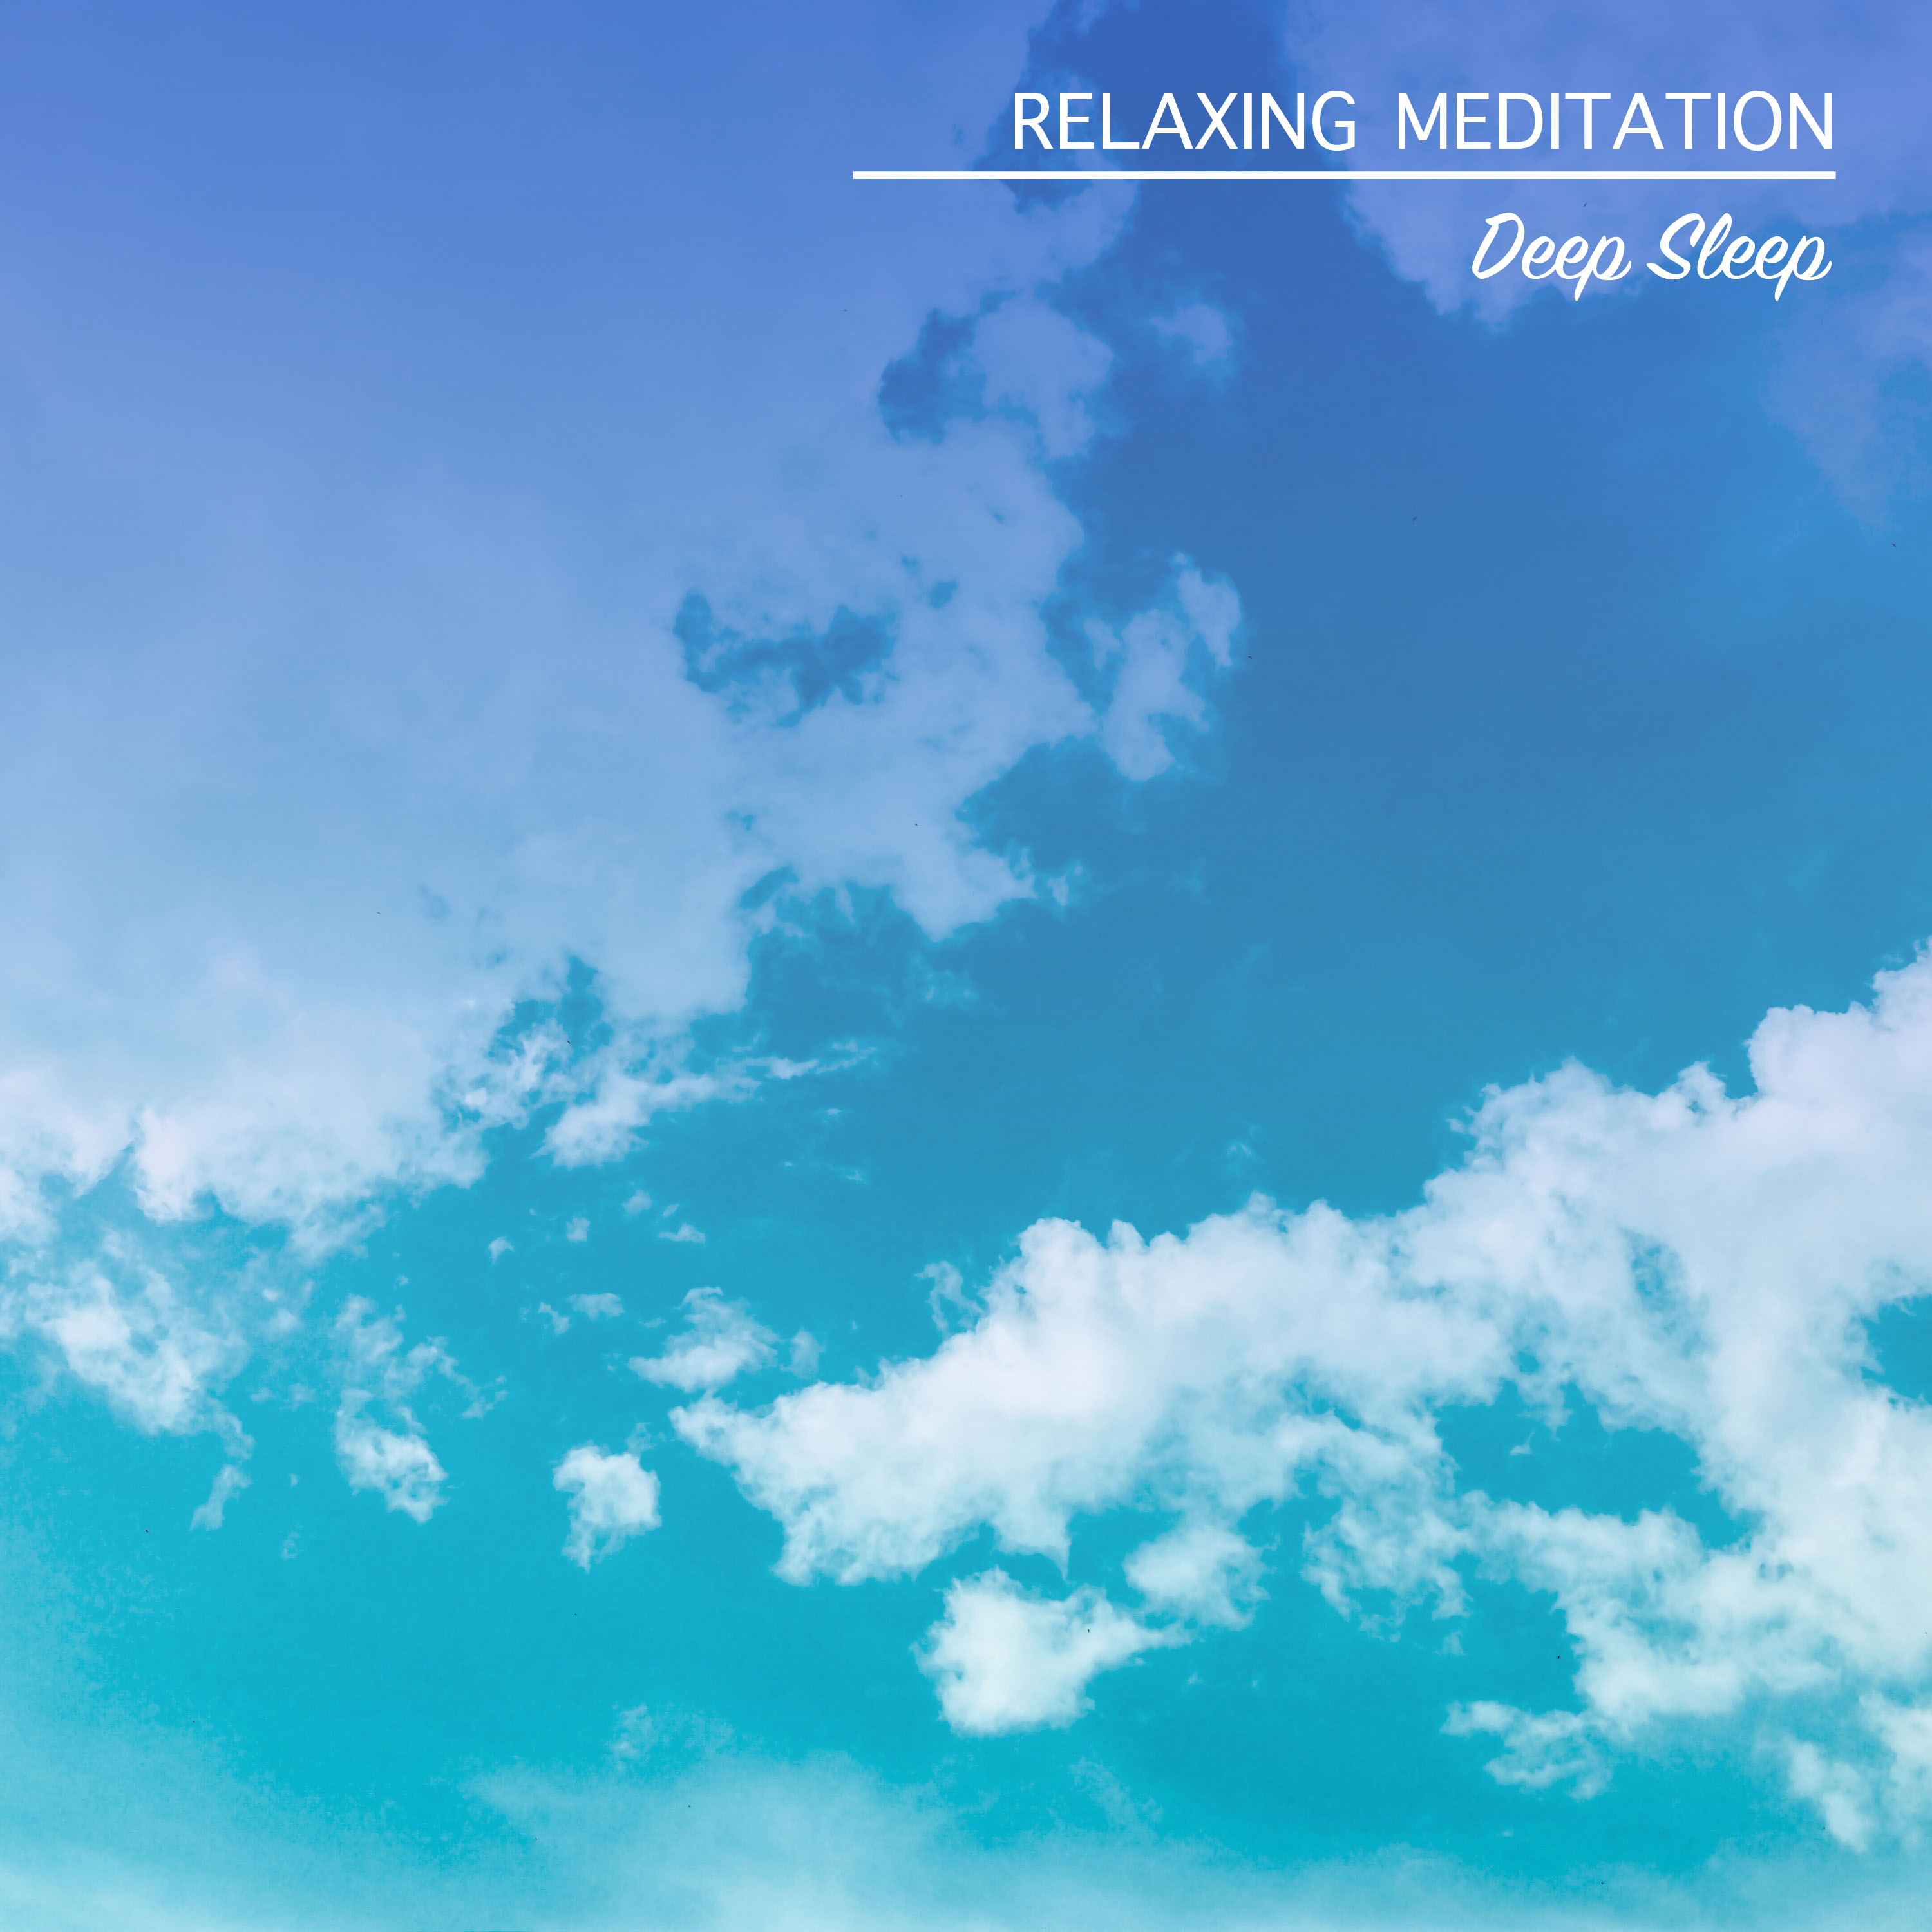 28 Relaxing Meditation and Deep Sleep Tracks